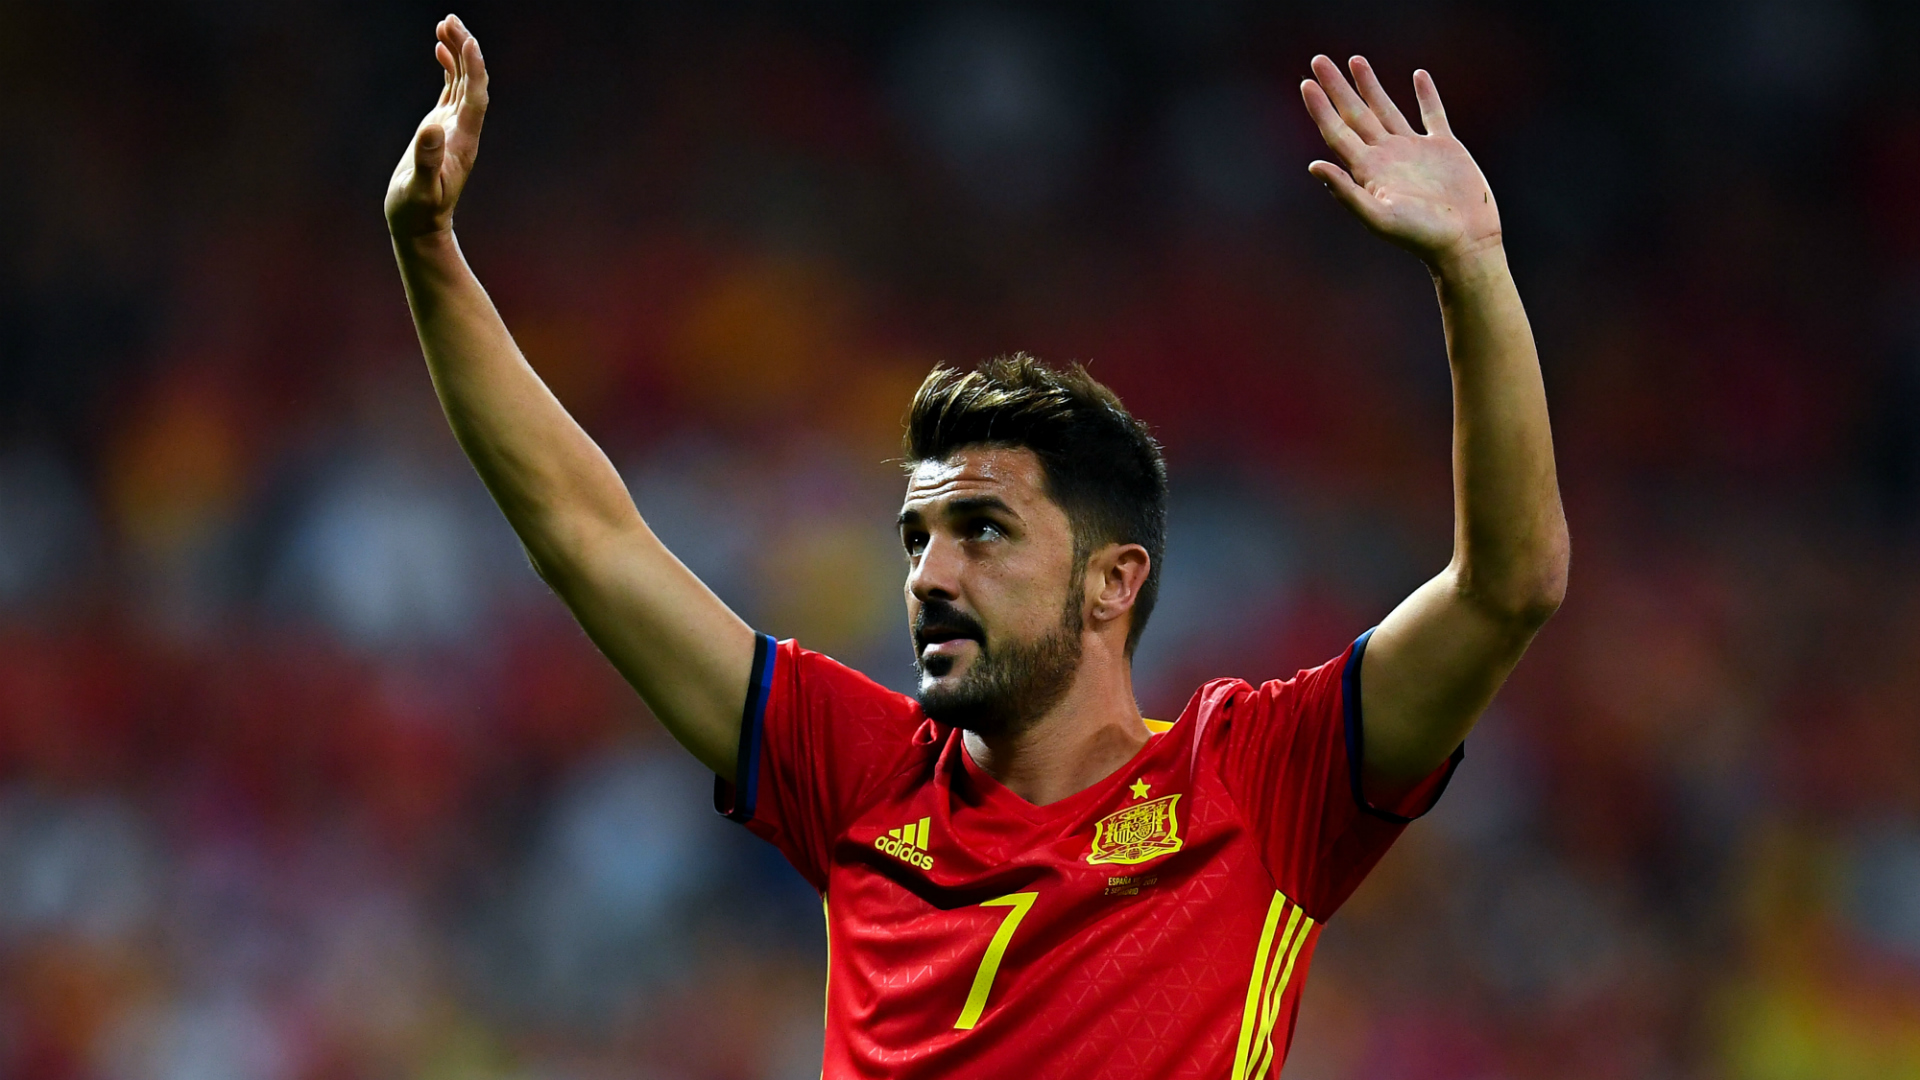 Spain’s all-time top goalscorer and former Barcelona striker David Villa announced his retirement from professional football, Image via stadiumastro